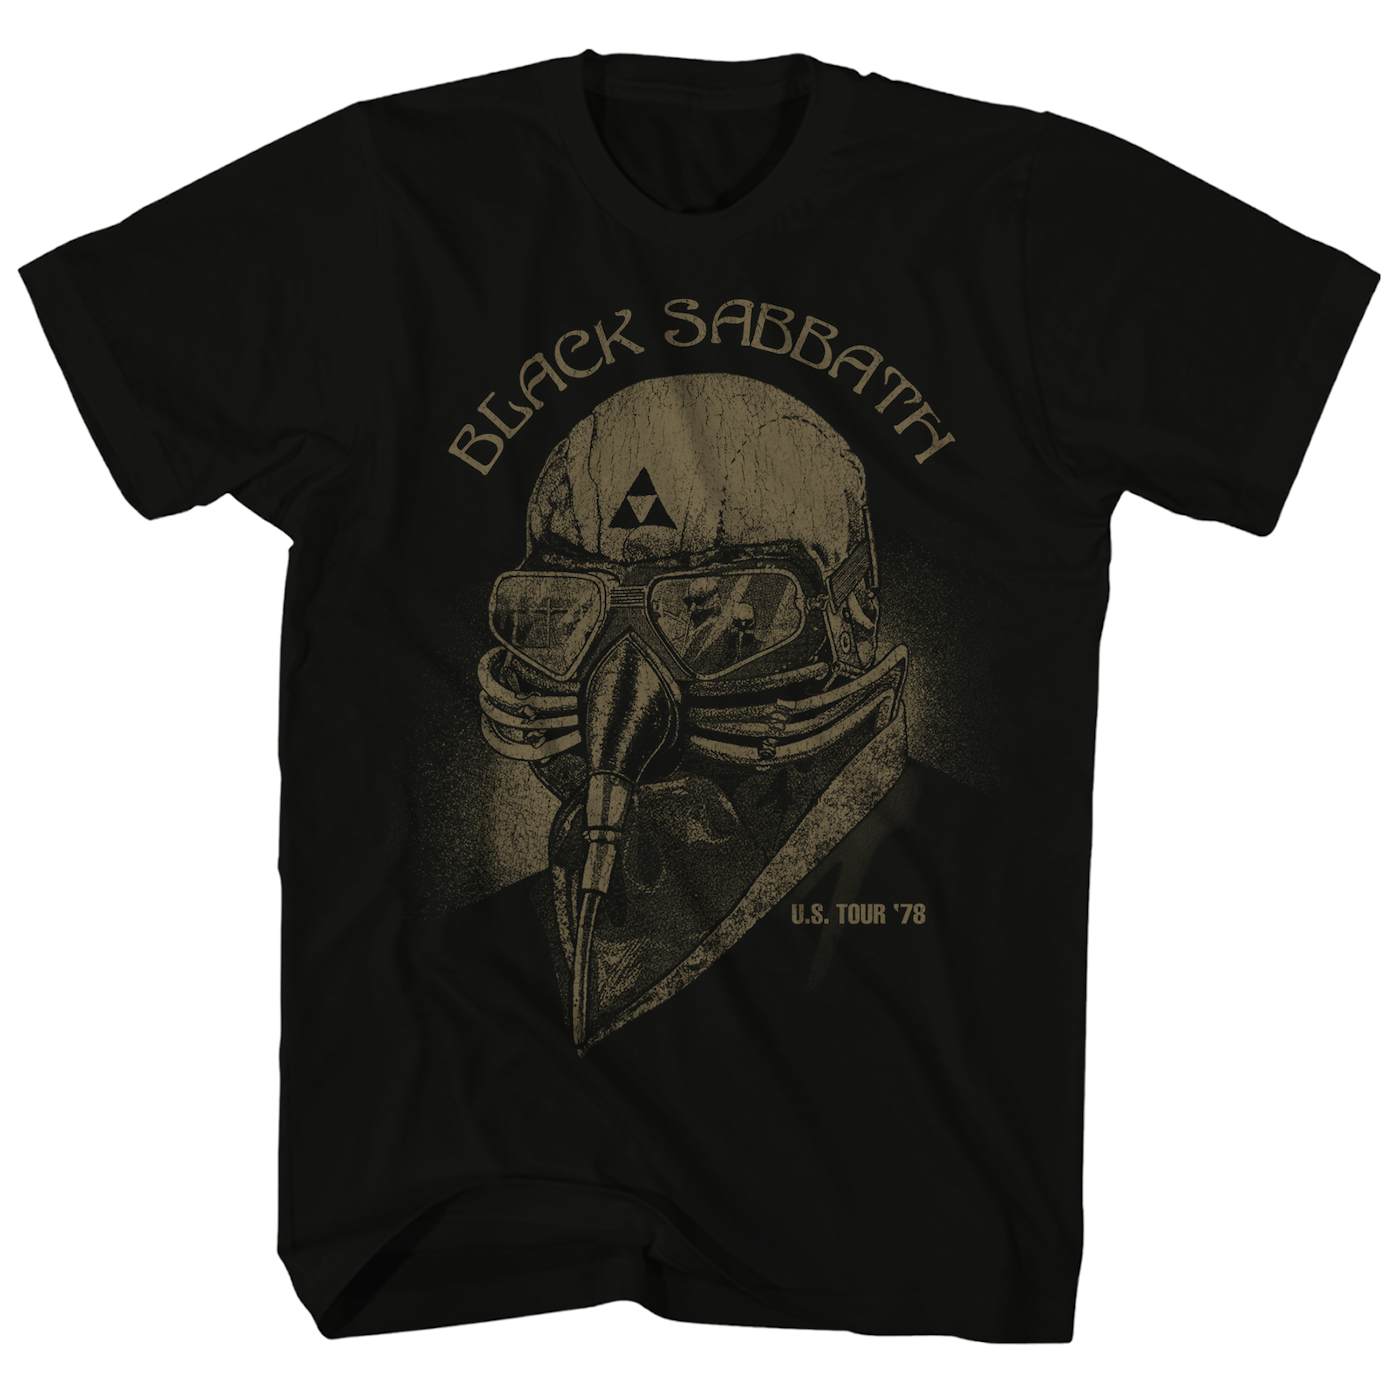 Black Sabbath T-Shirt | US Tour ’78 Black Sabbath T-Shirt (Reissue)